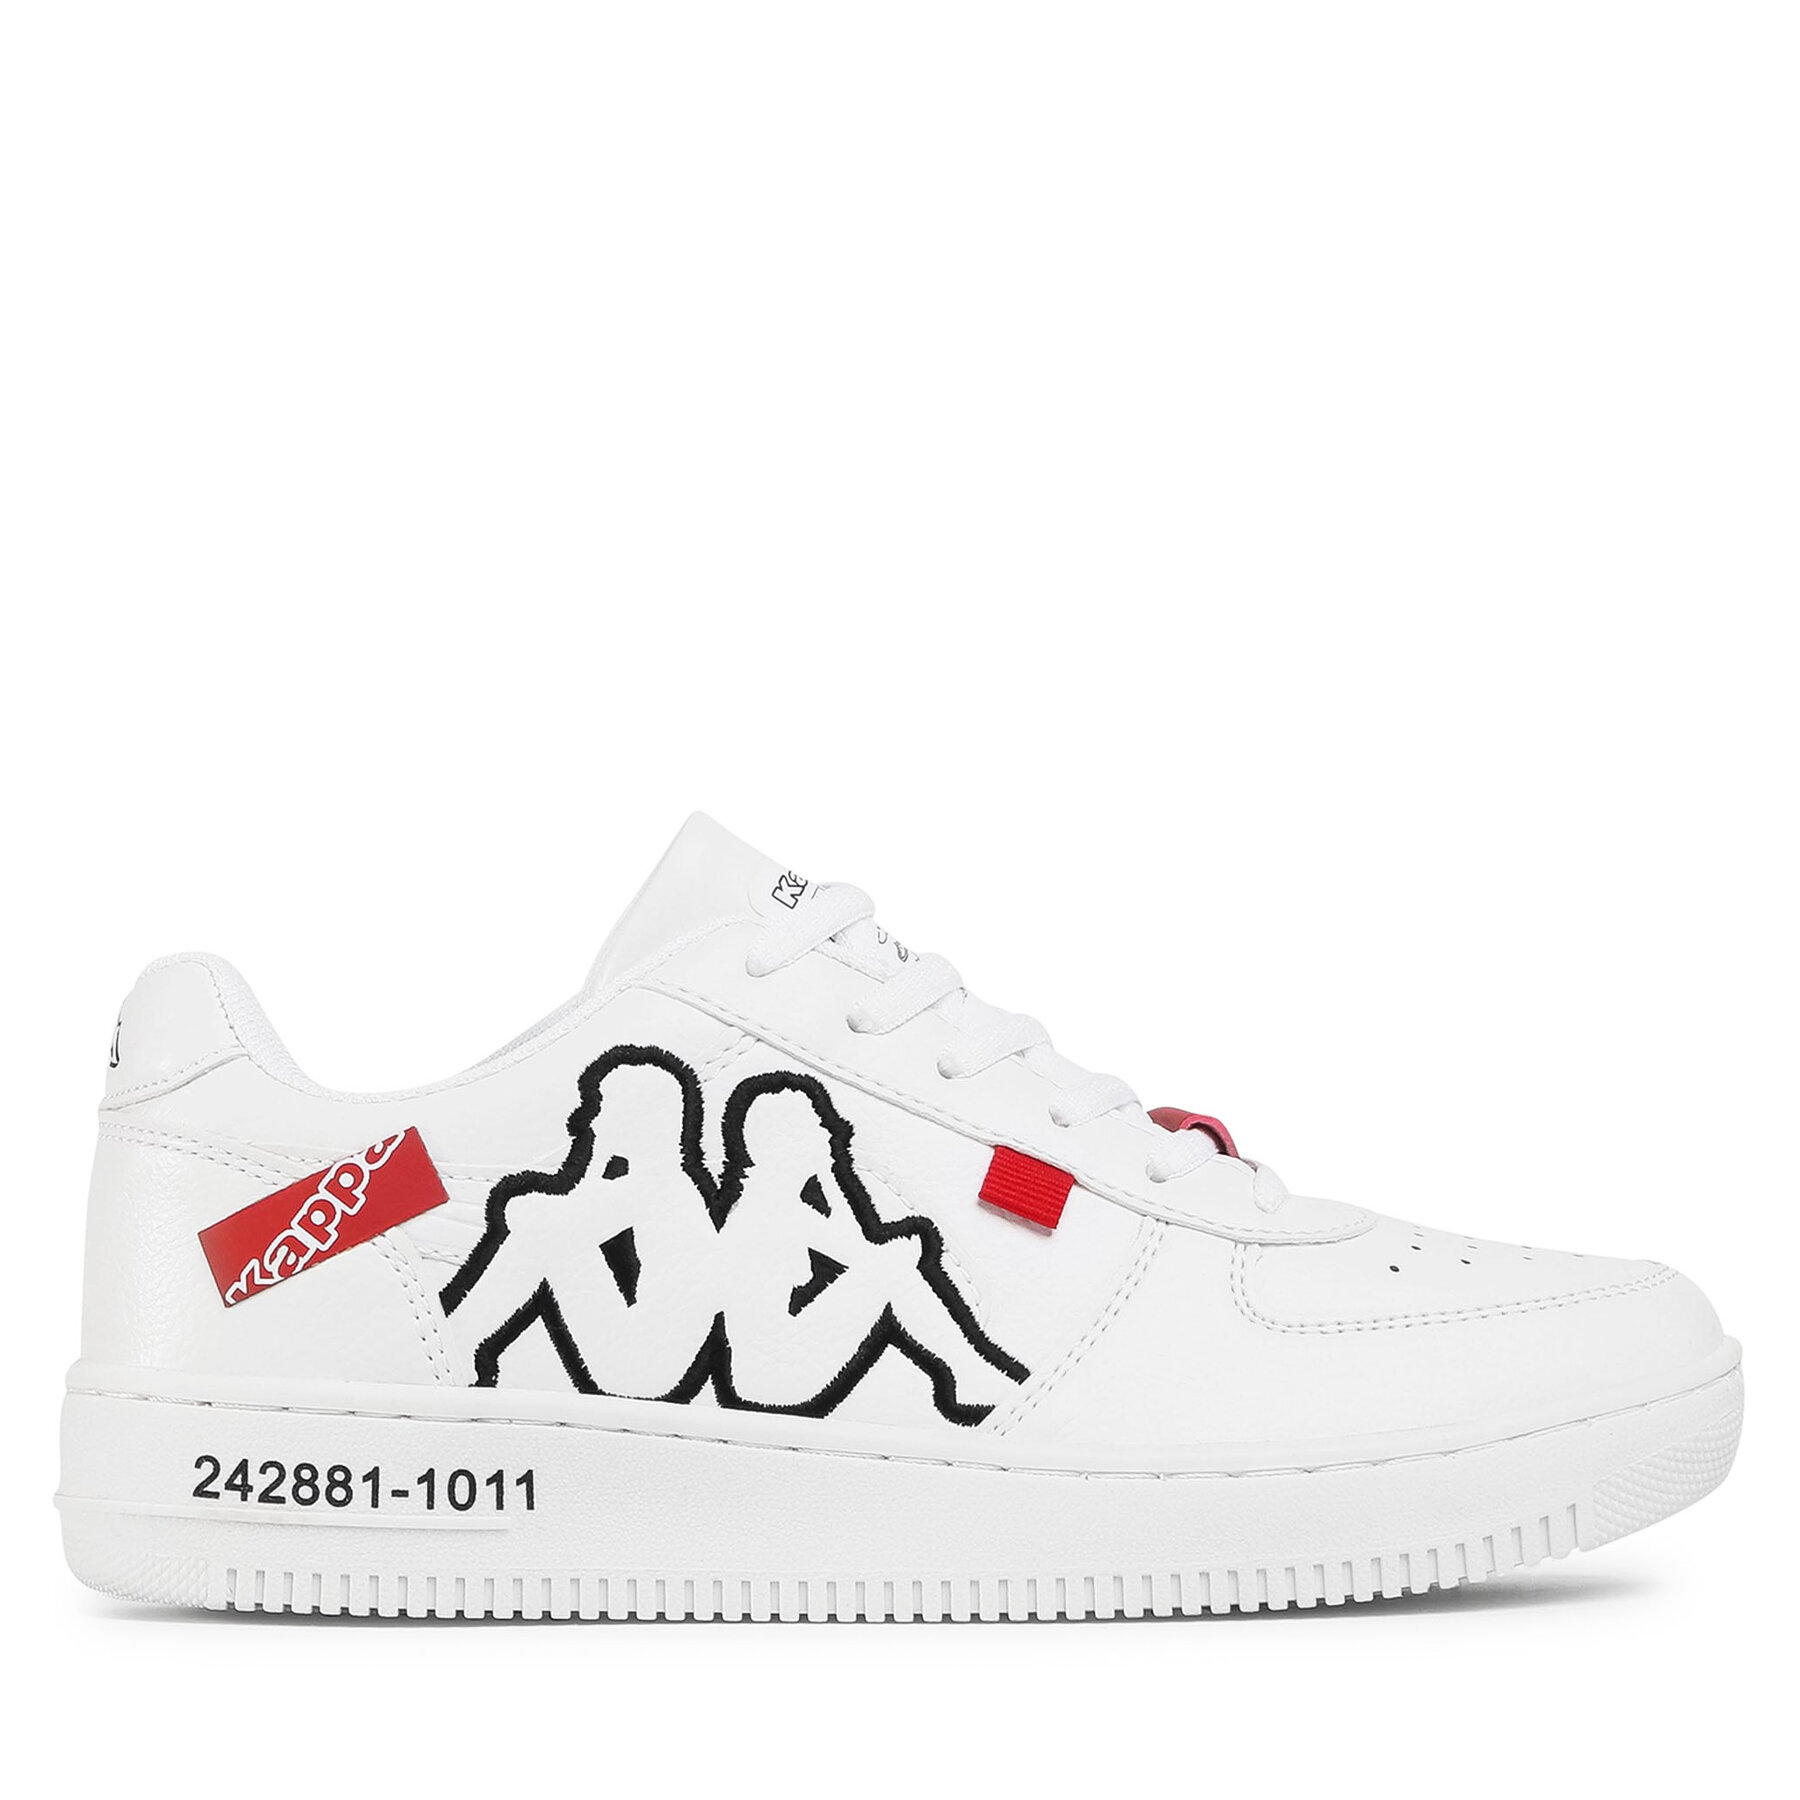 Sneakers Kappa 242881 White/Black 1011 von Kappa